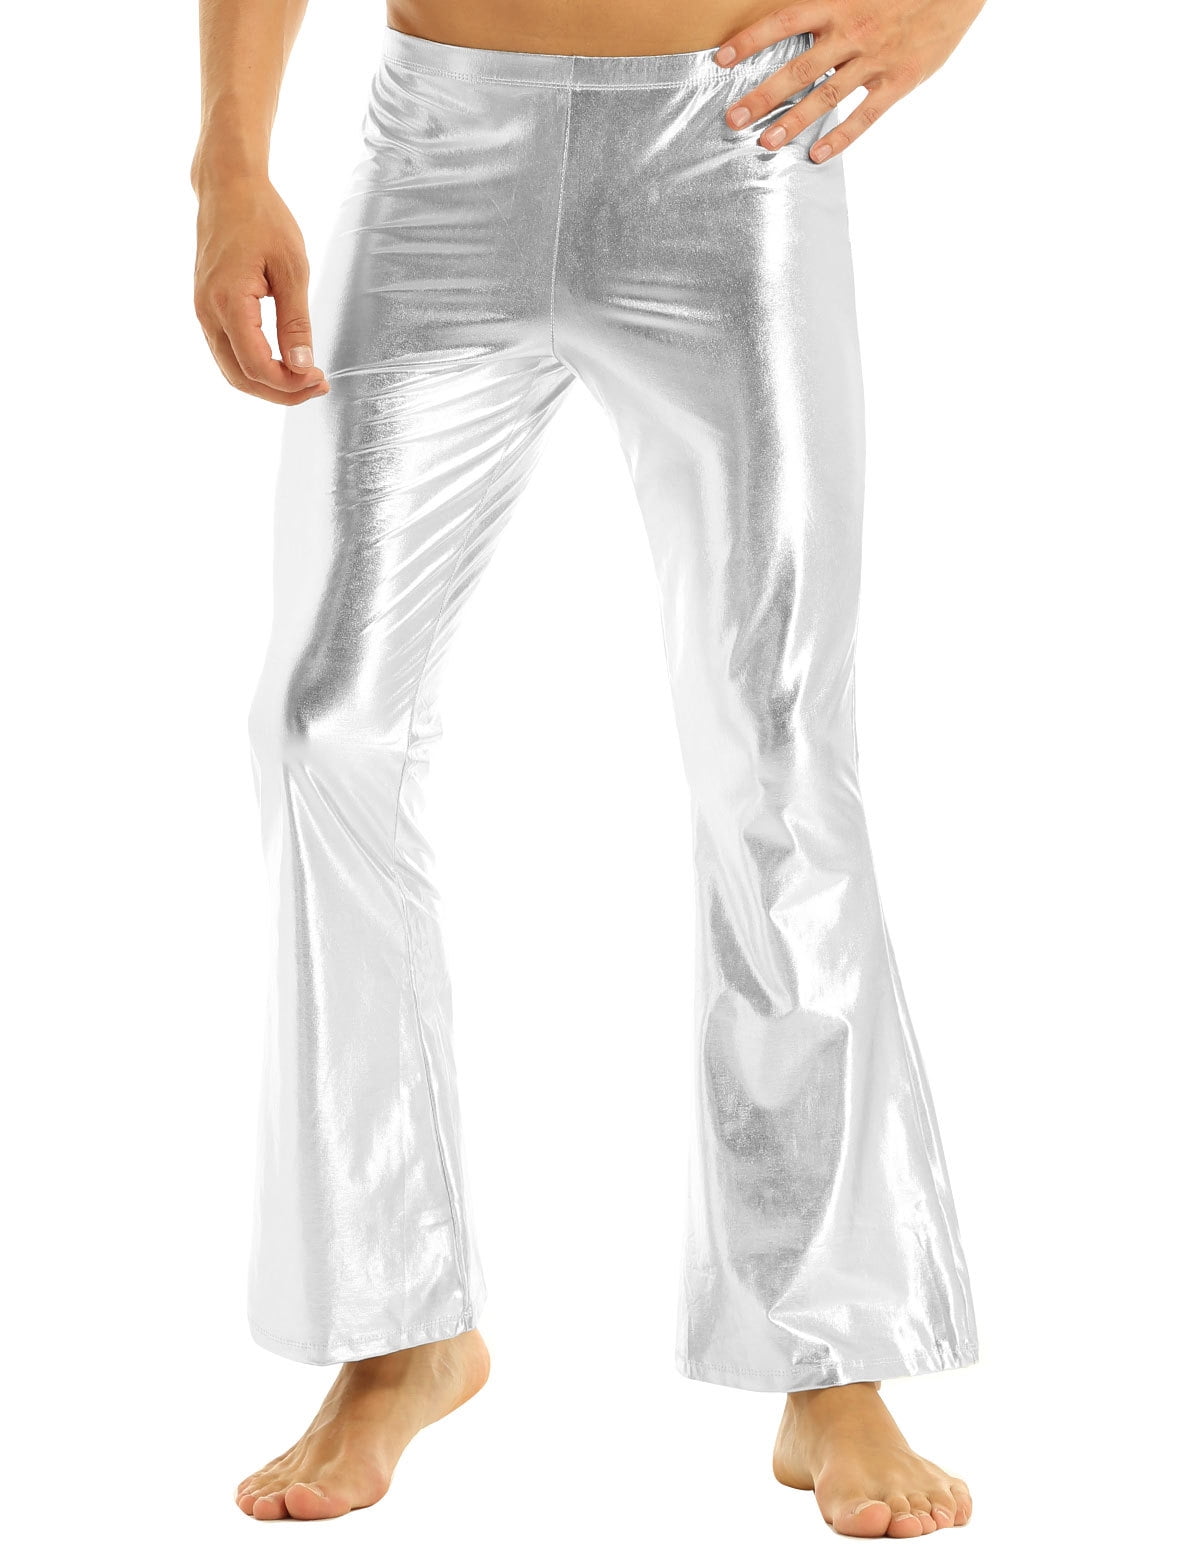 Aislor Men's Shiny Metallic 70s Vintage Disco Pants Bell Bottom